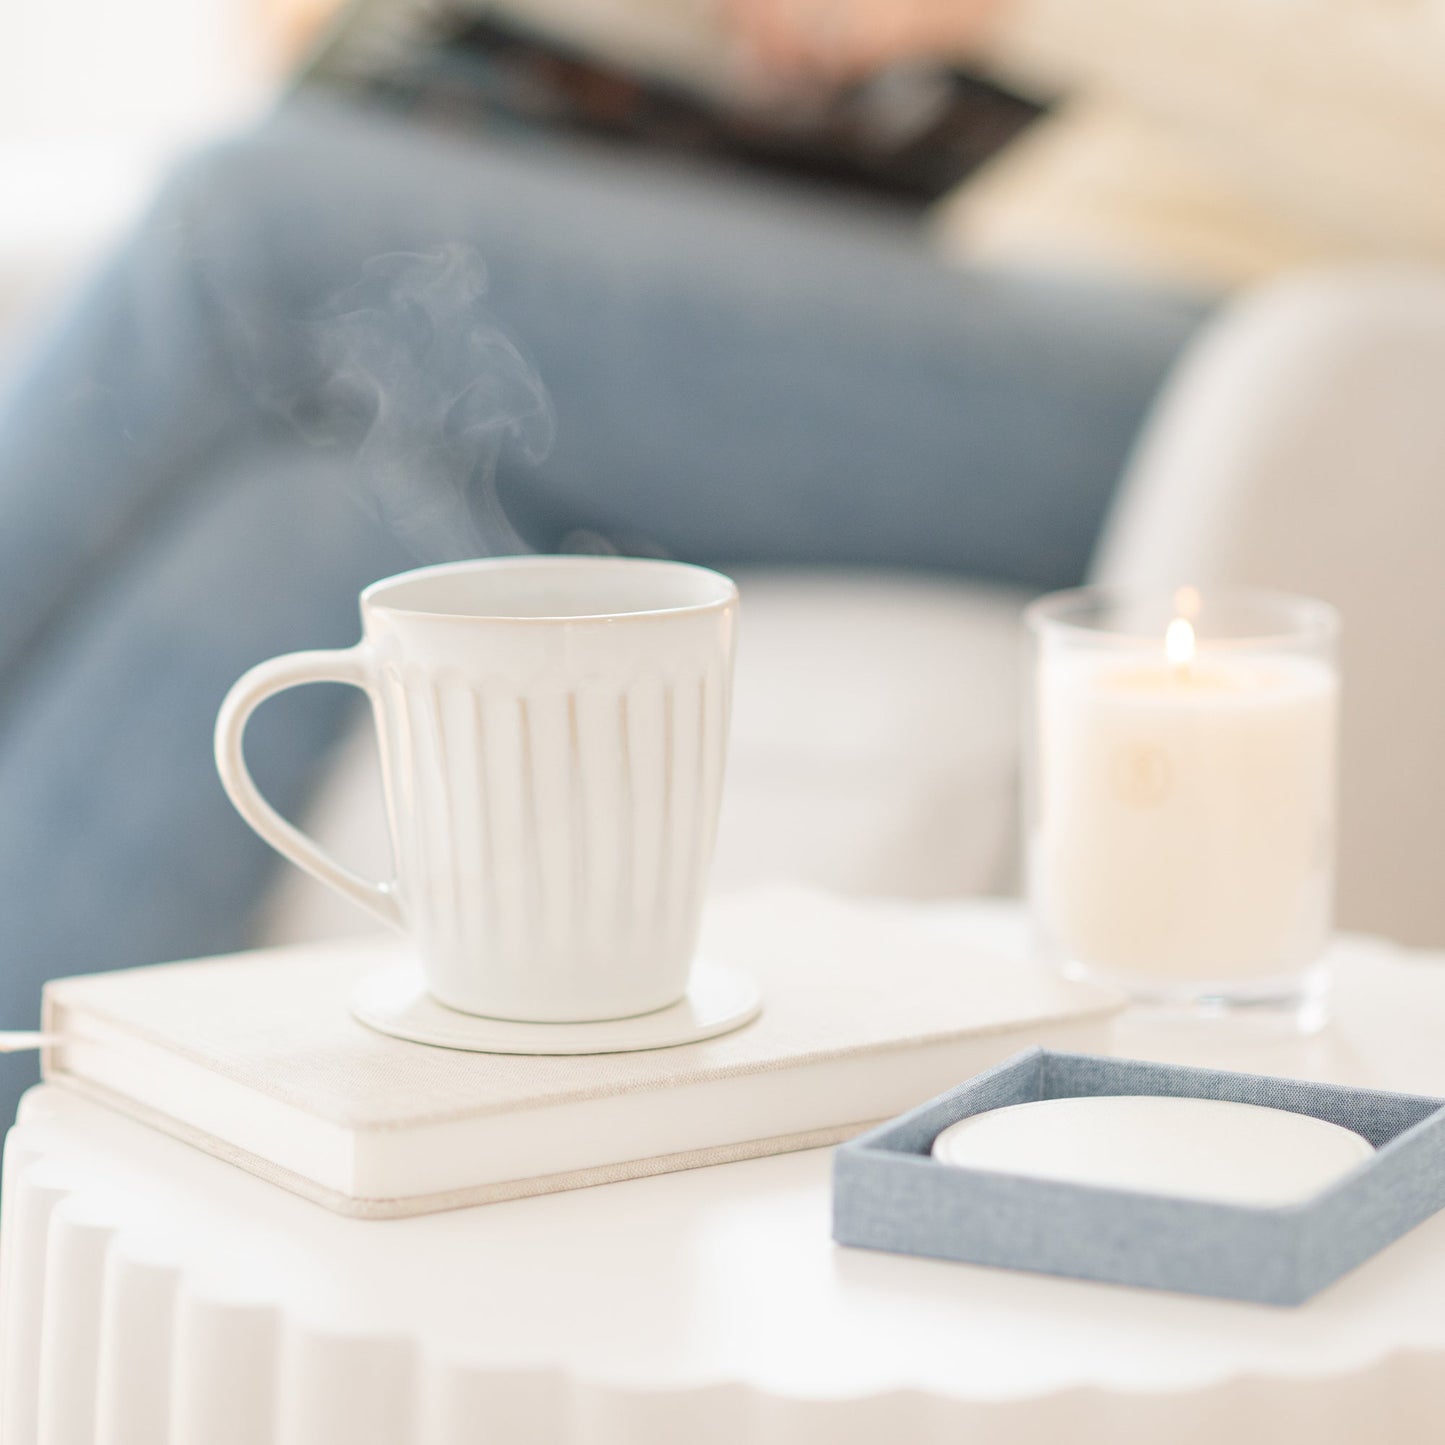 White coasters on journal with coffee mug